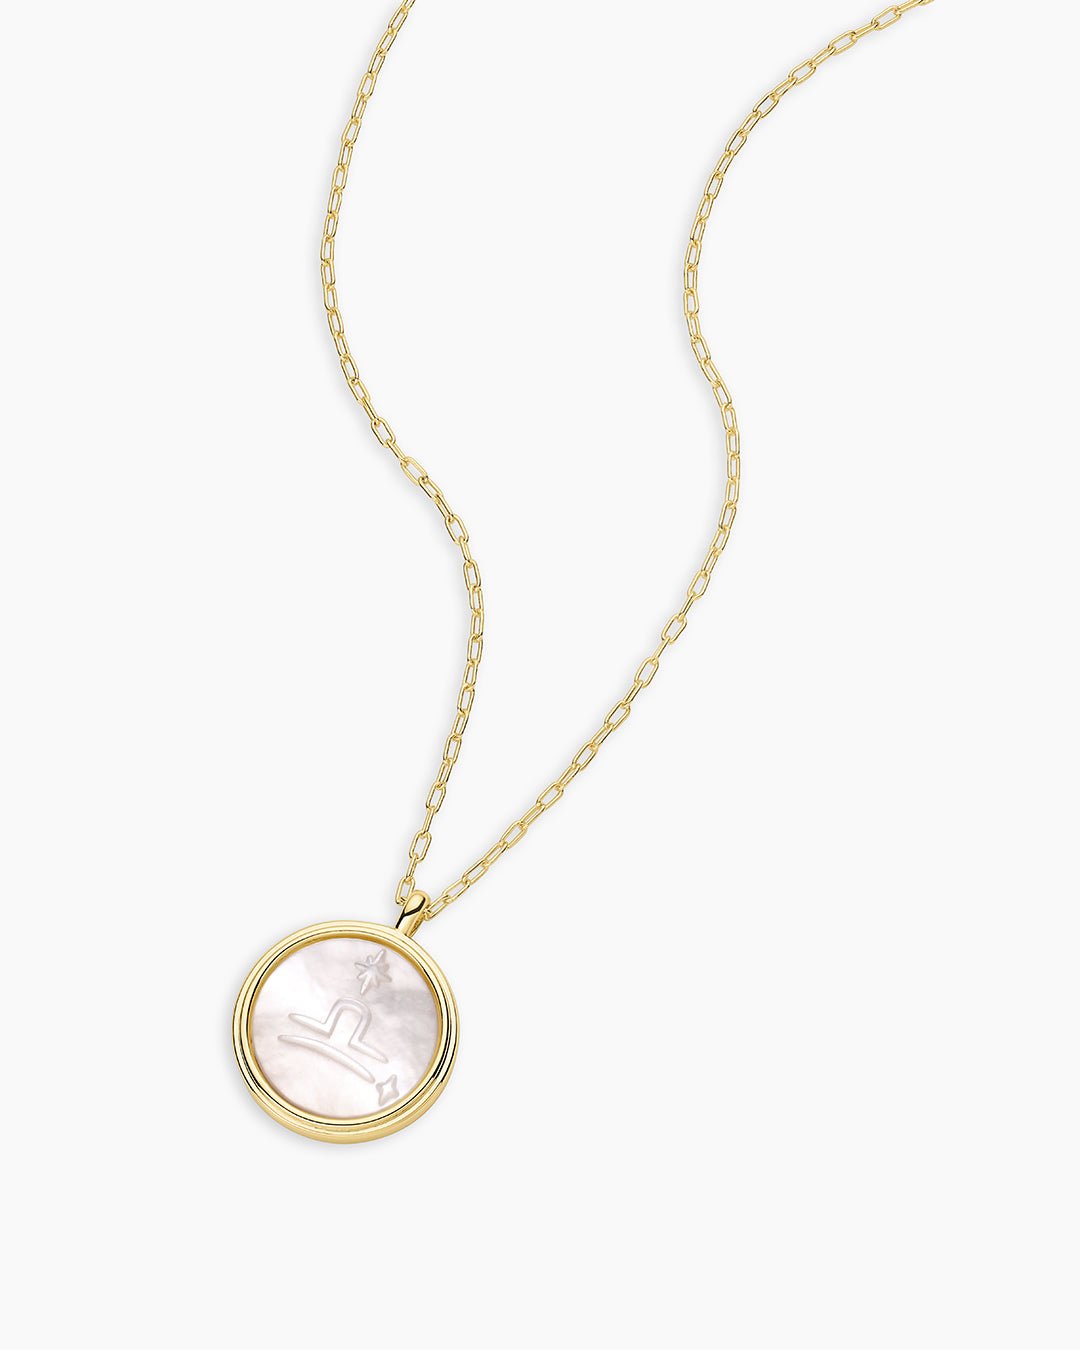 Zodiac Necklace - Scorpio, Astrology Coin Necklace, Scorpio Necklace || option::Gold Plated, Libra